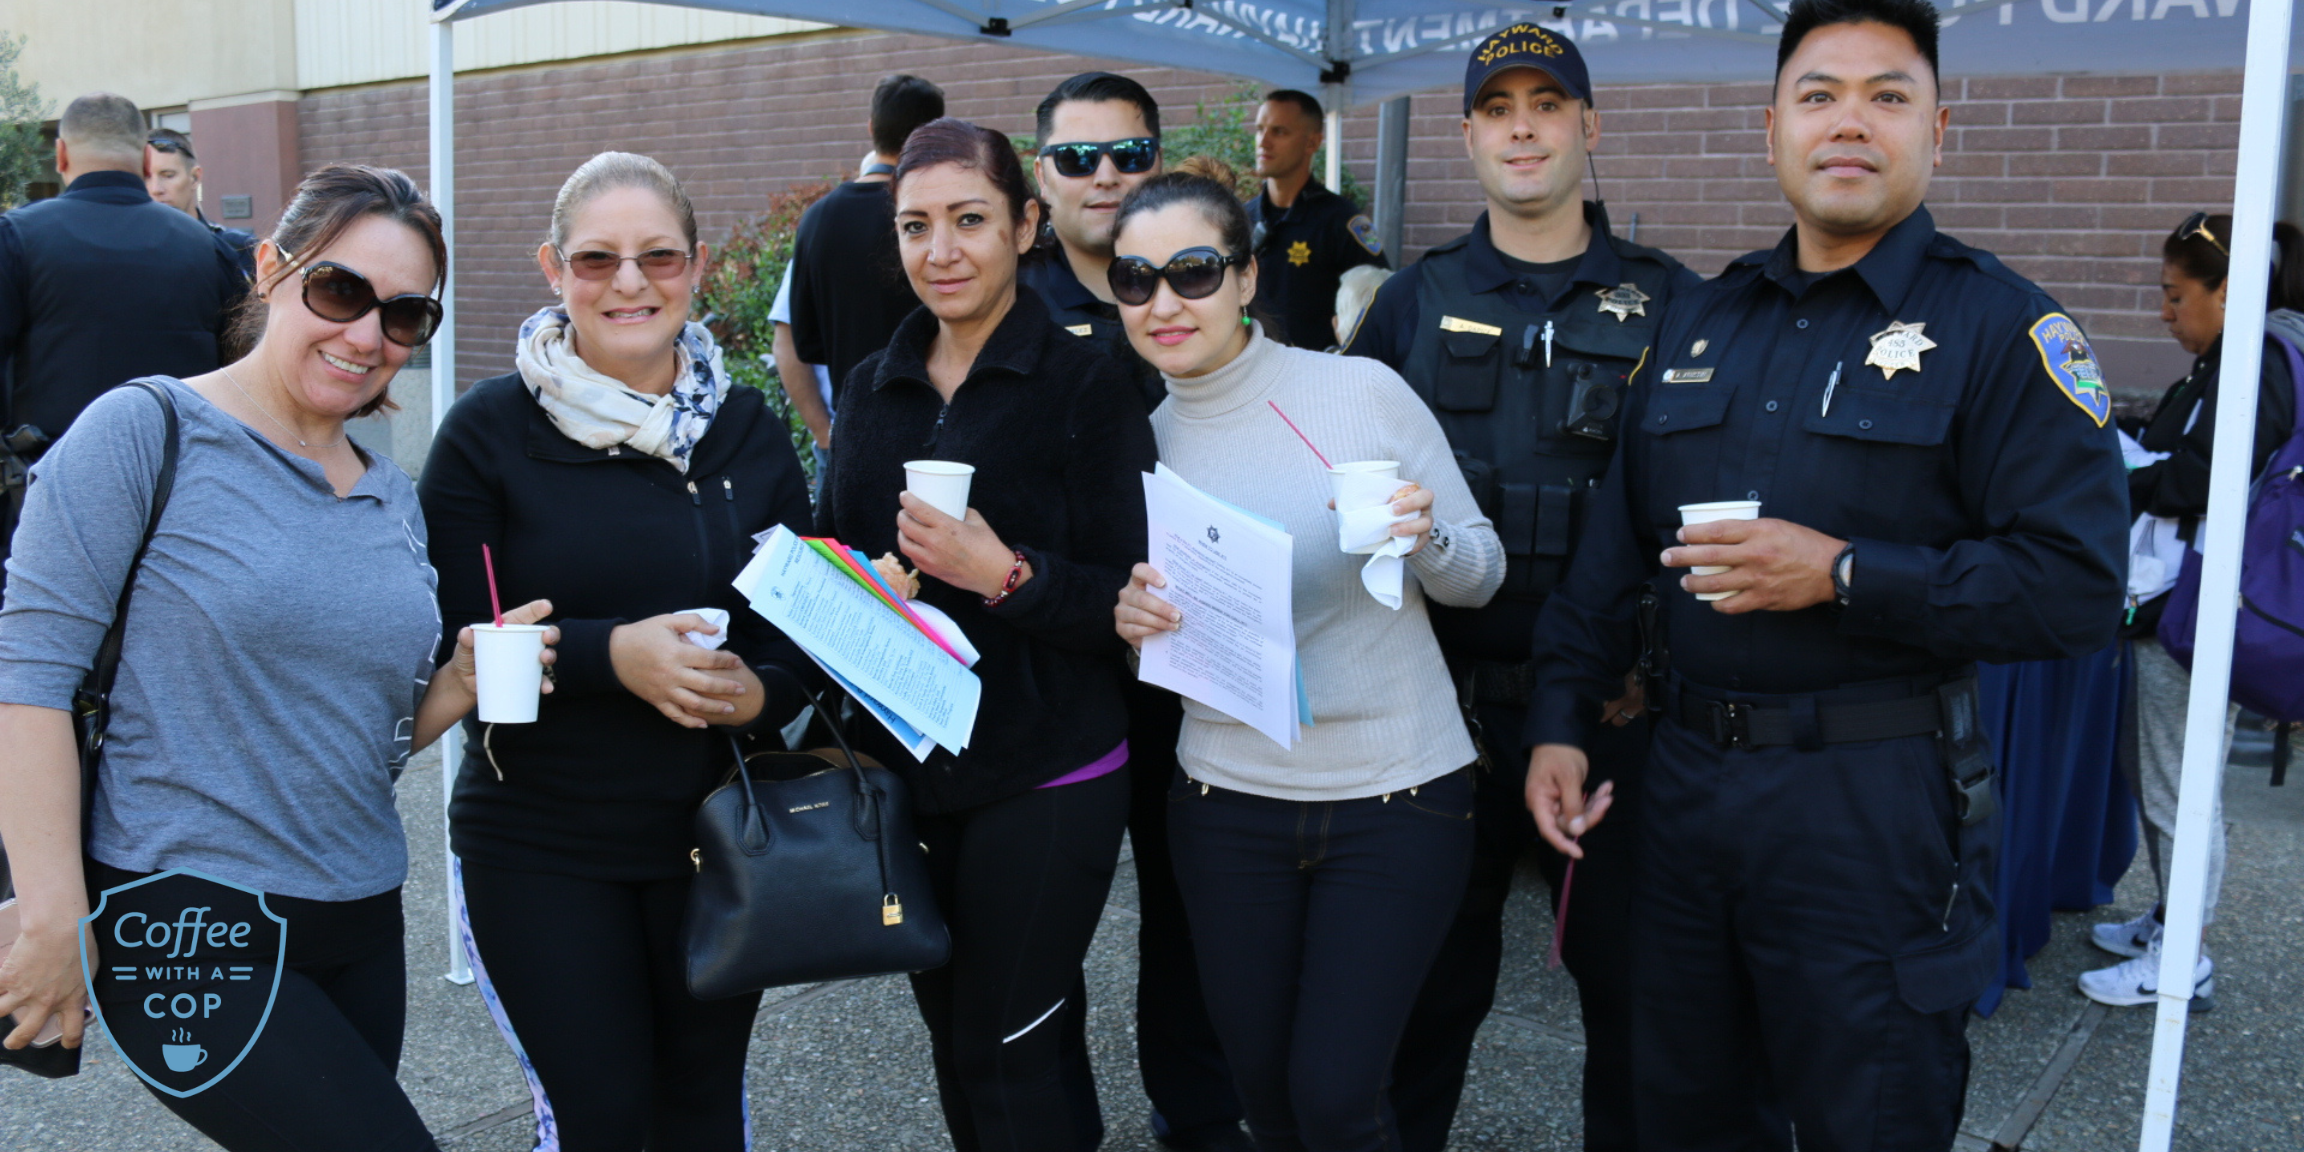 Hayward Police staff having coffee with community members